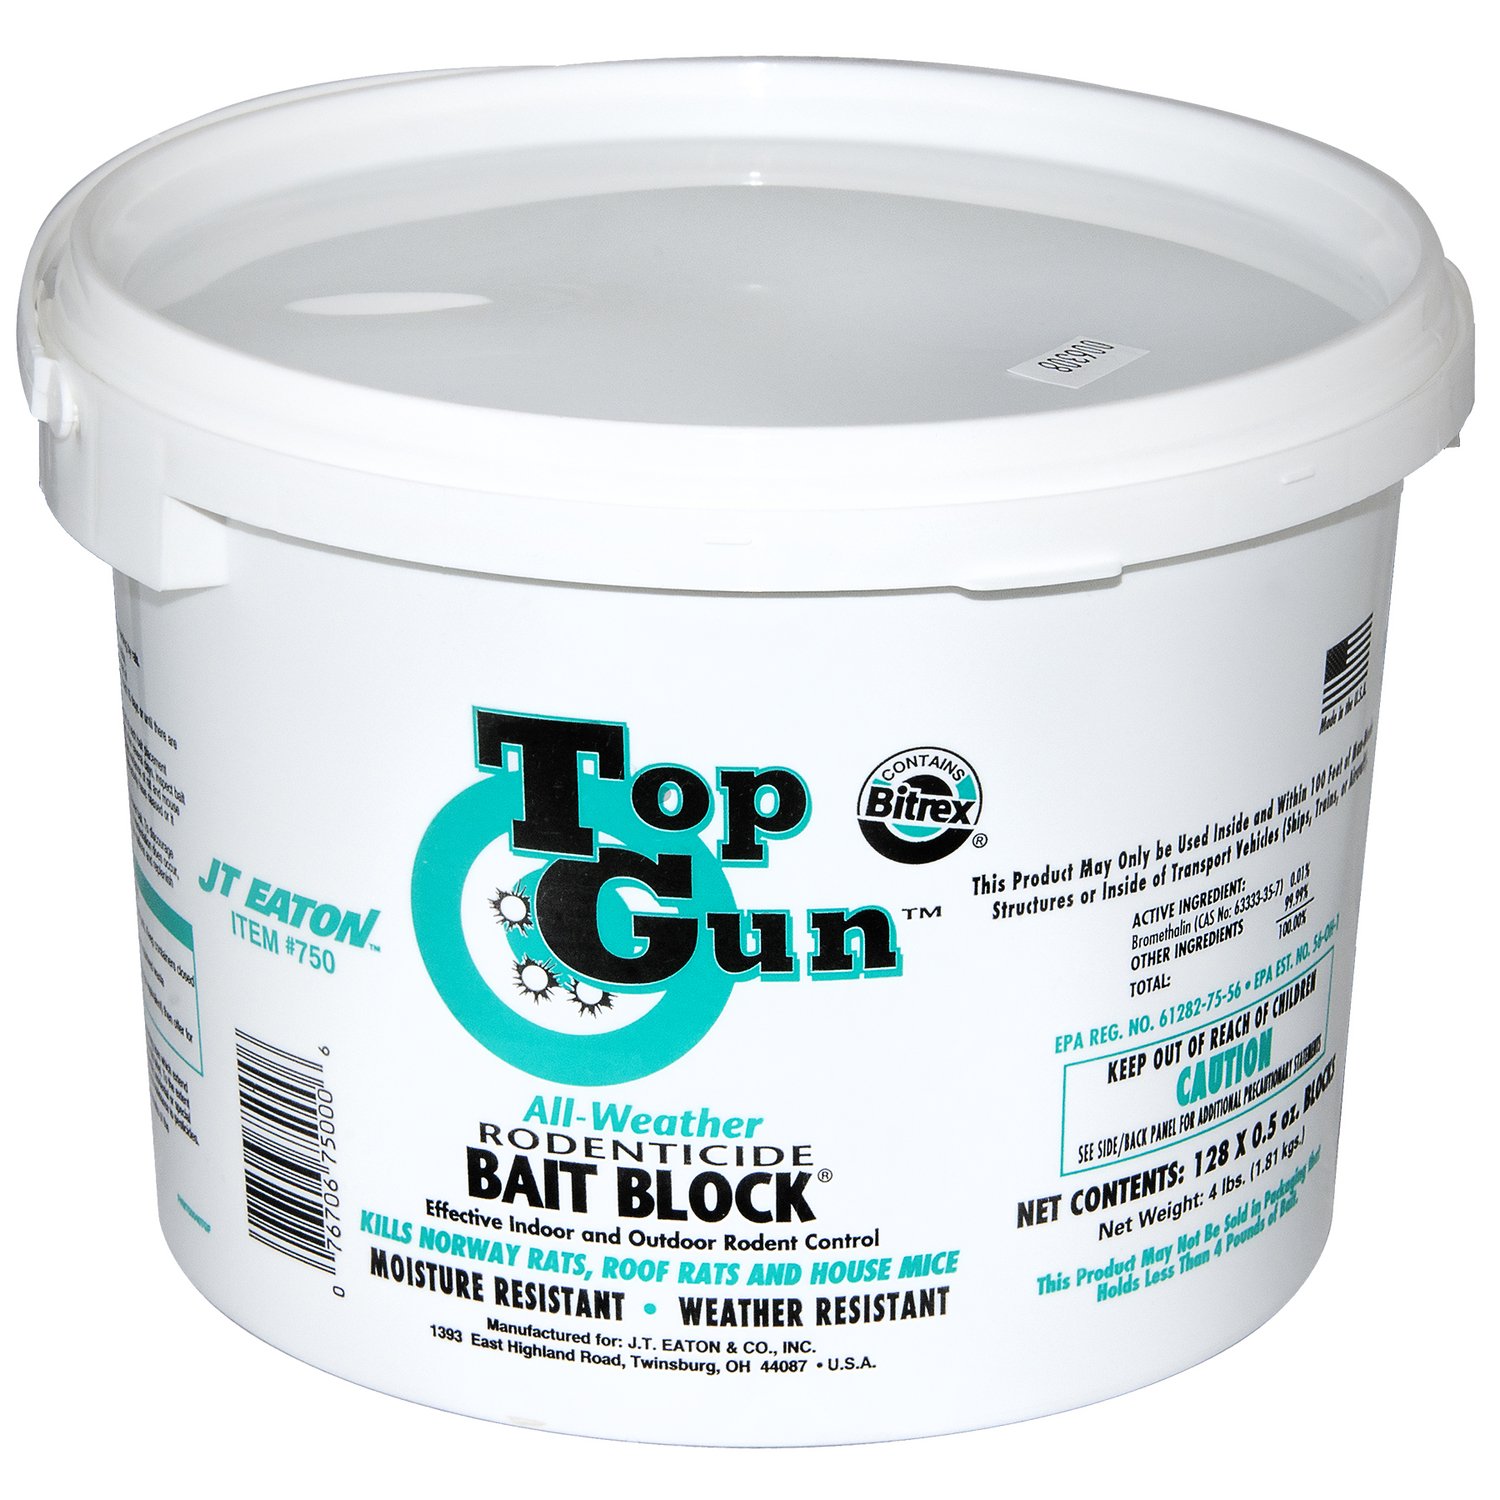 JT Eaton Top Gun Toxic Bitrex Bait Blocks For Mice and Rats 4 lb